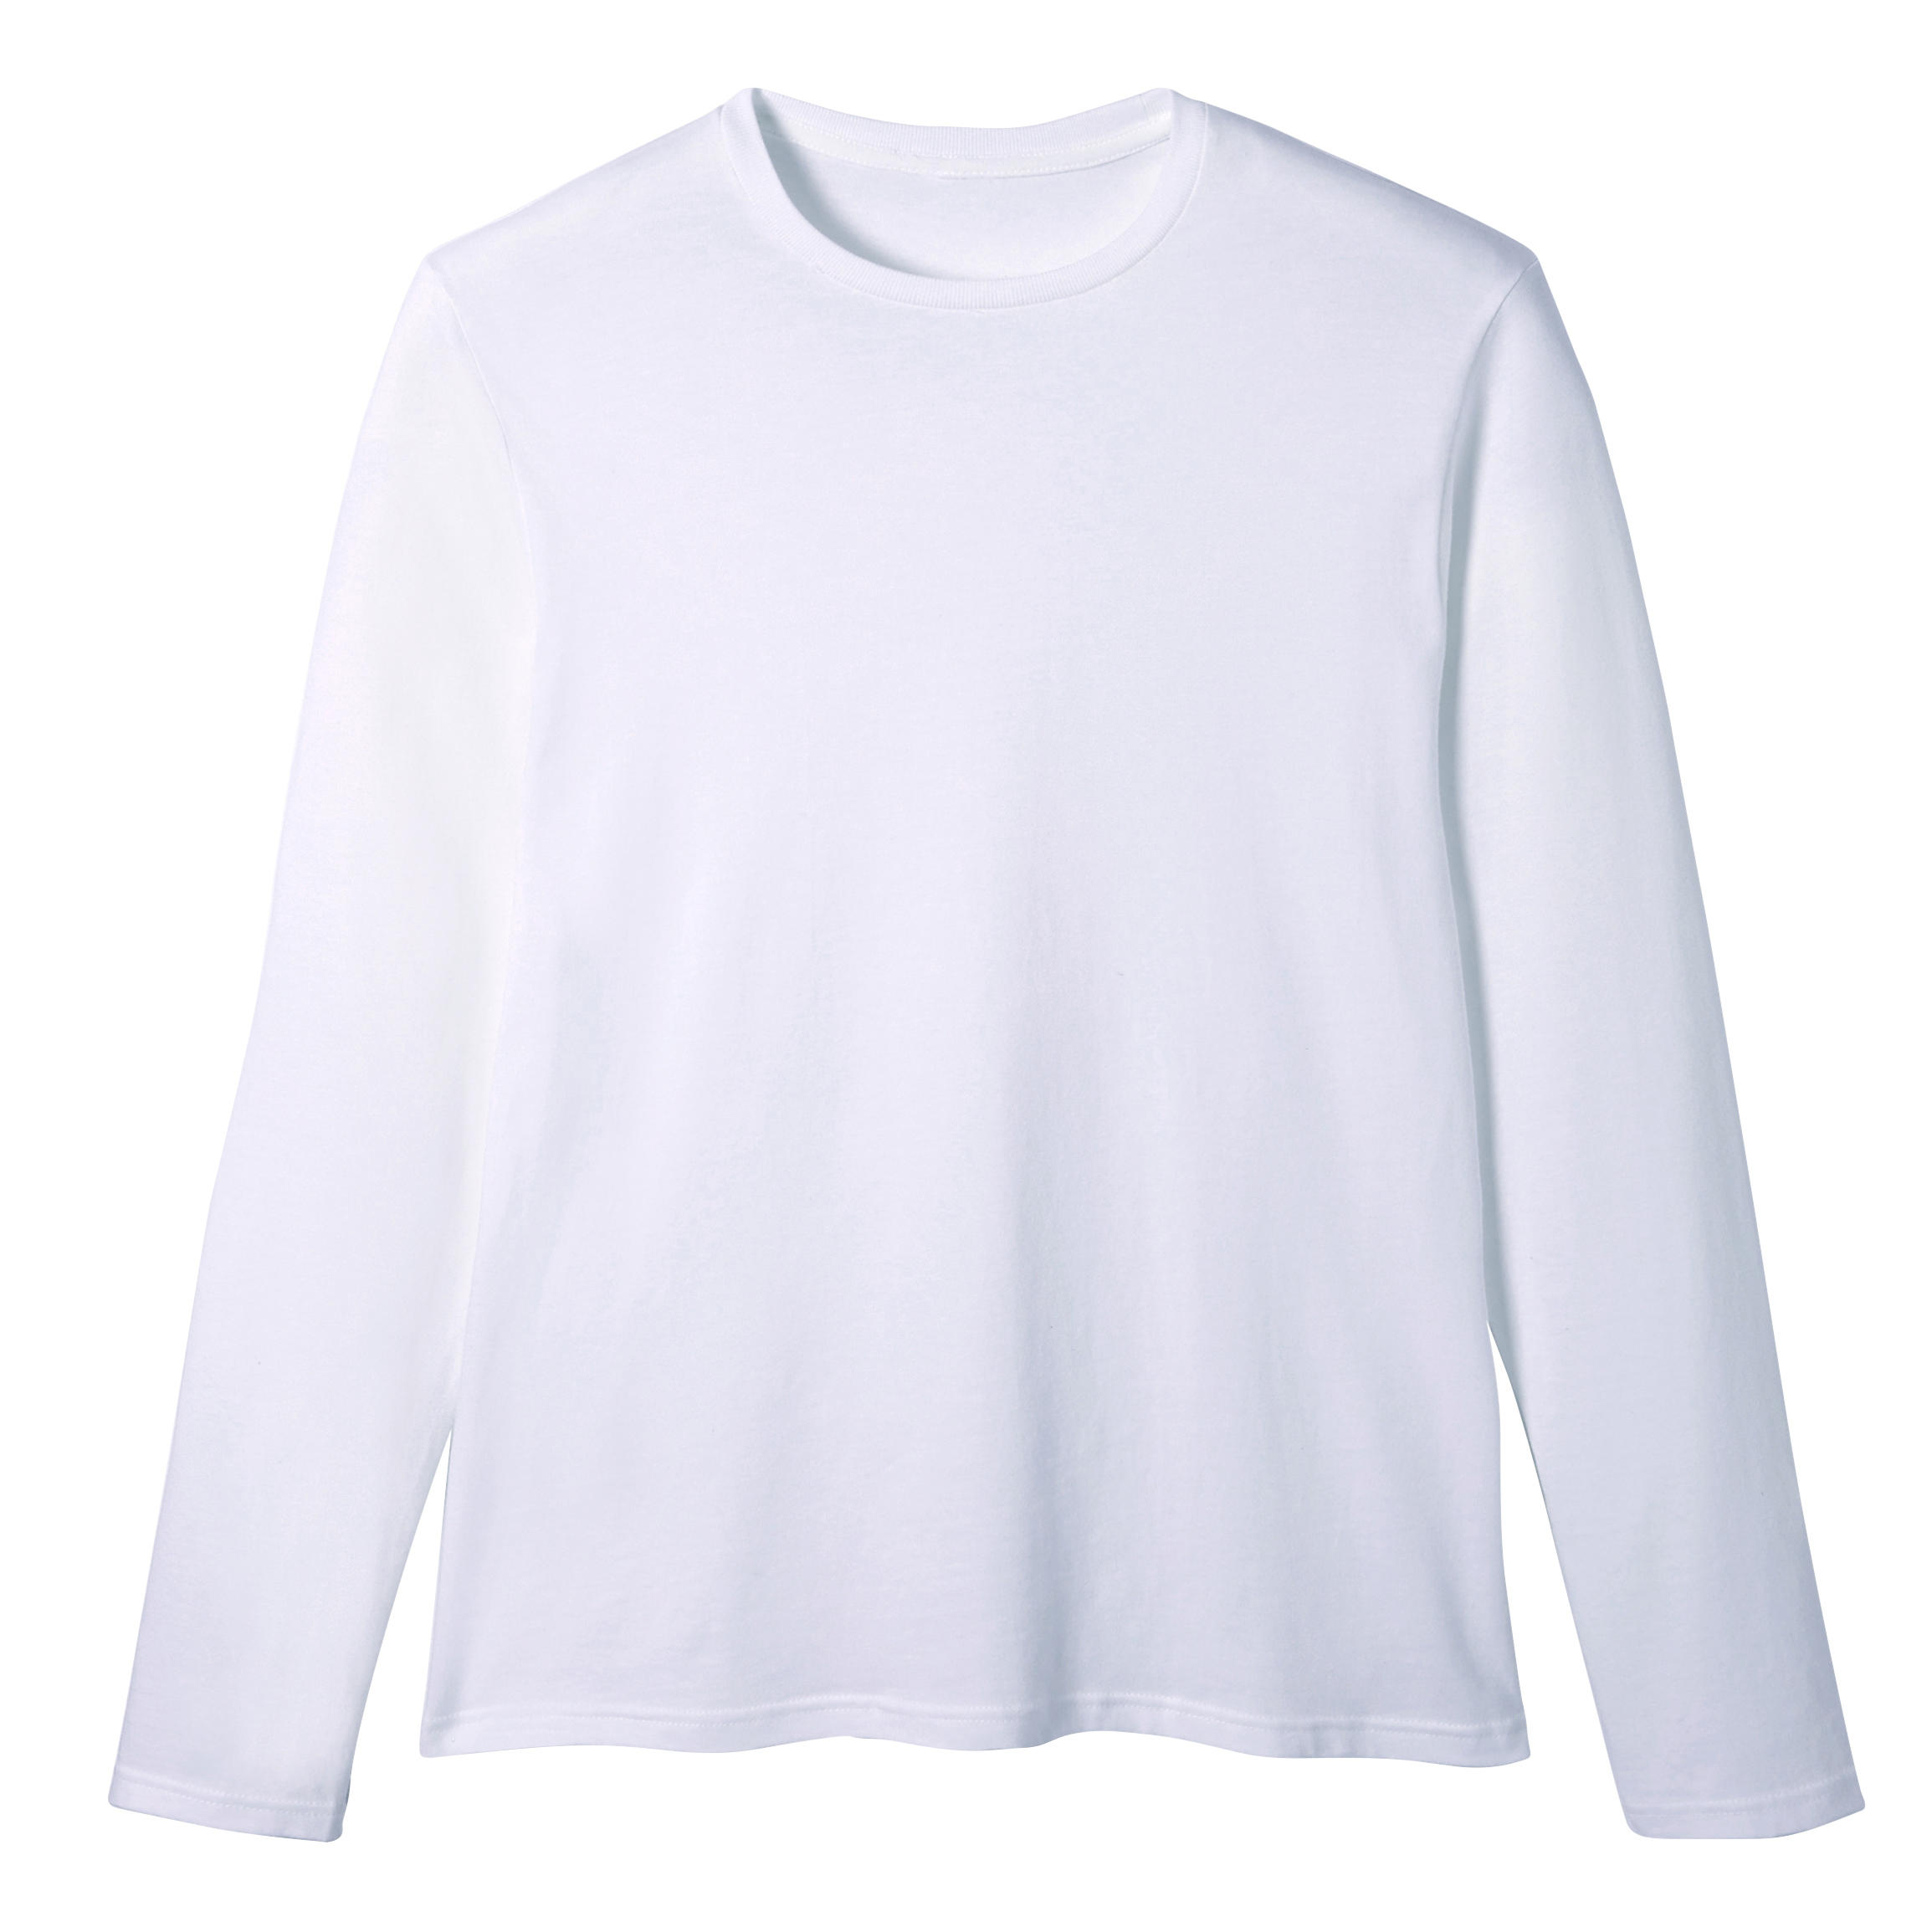 Men's Long-Sleeved Straight-Cut Crew Neck Cotton Fitness T-Shirt 100 - Glacier White 4/5